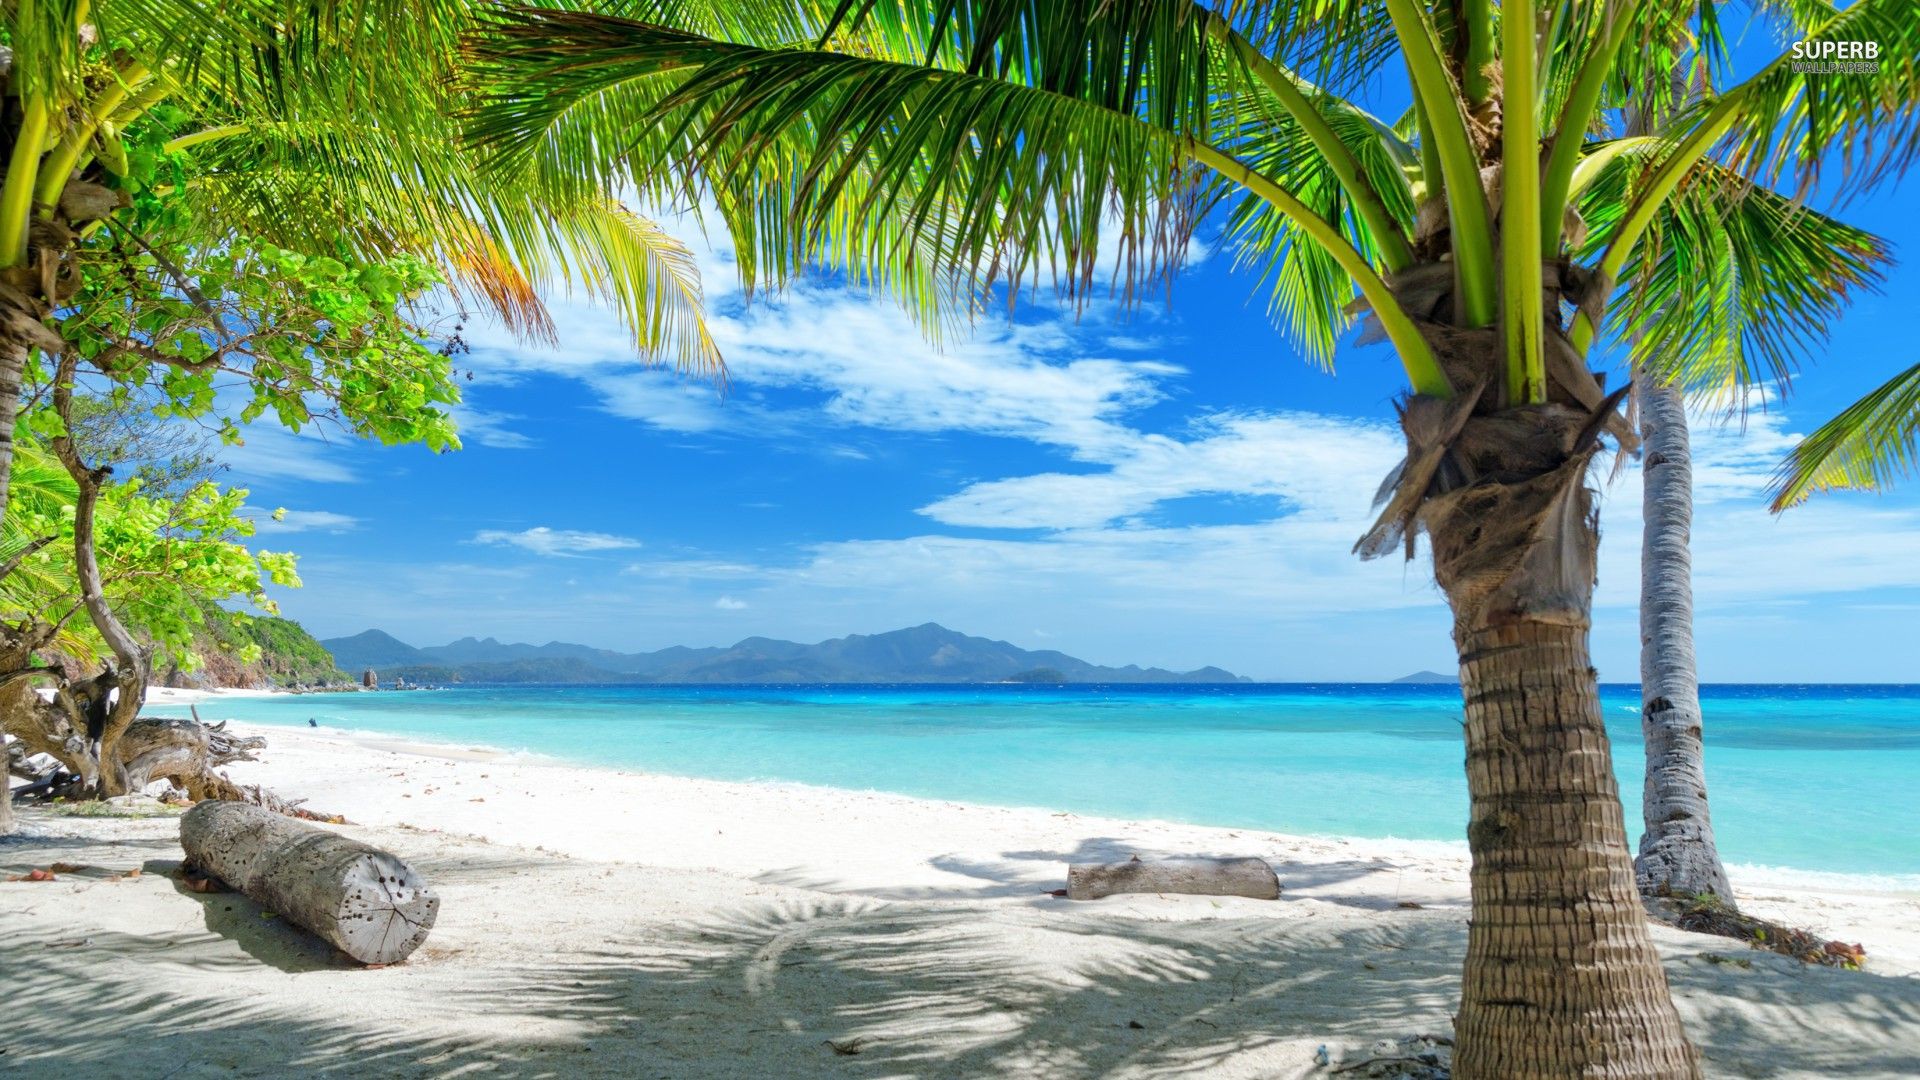 Papel tapiz de playa para computadora - Playa tropical de alta resolución